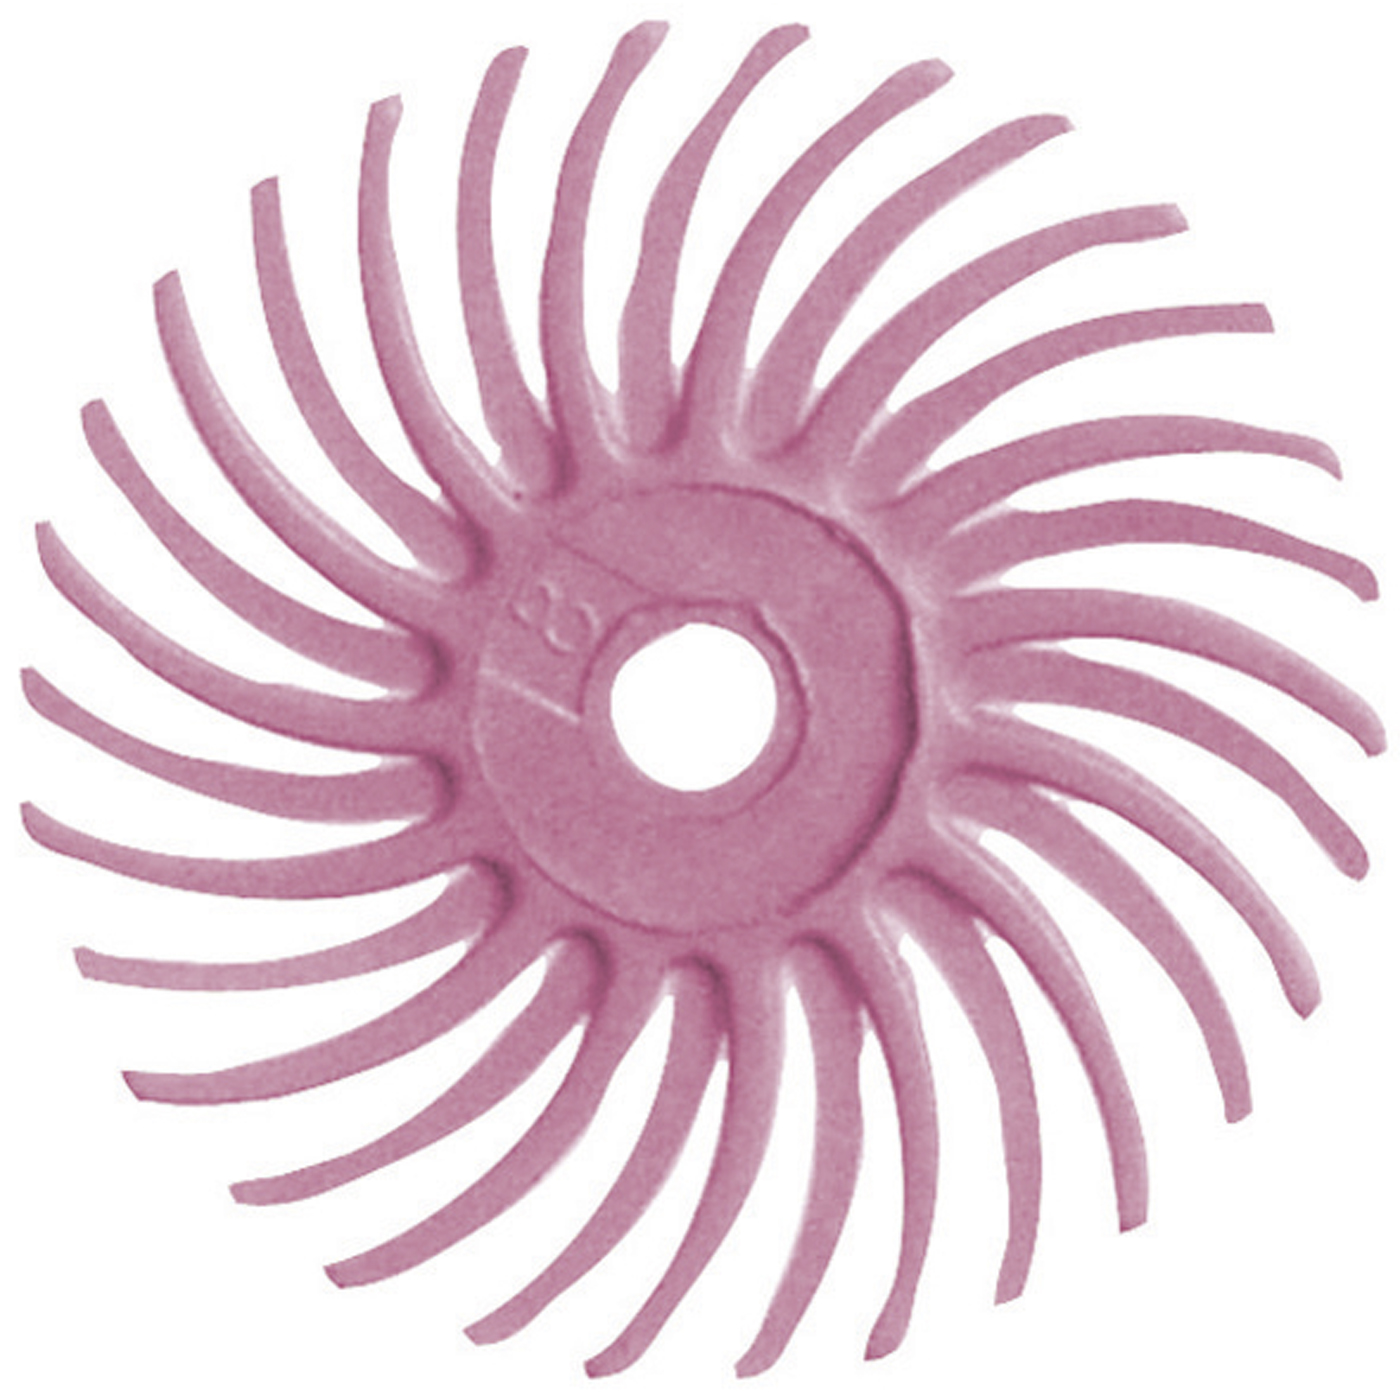 Habras Discs, Pink, Very Fine (Pumice), ø 14 mm - 4 pieces